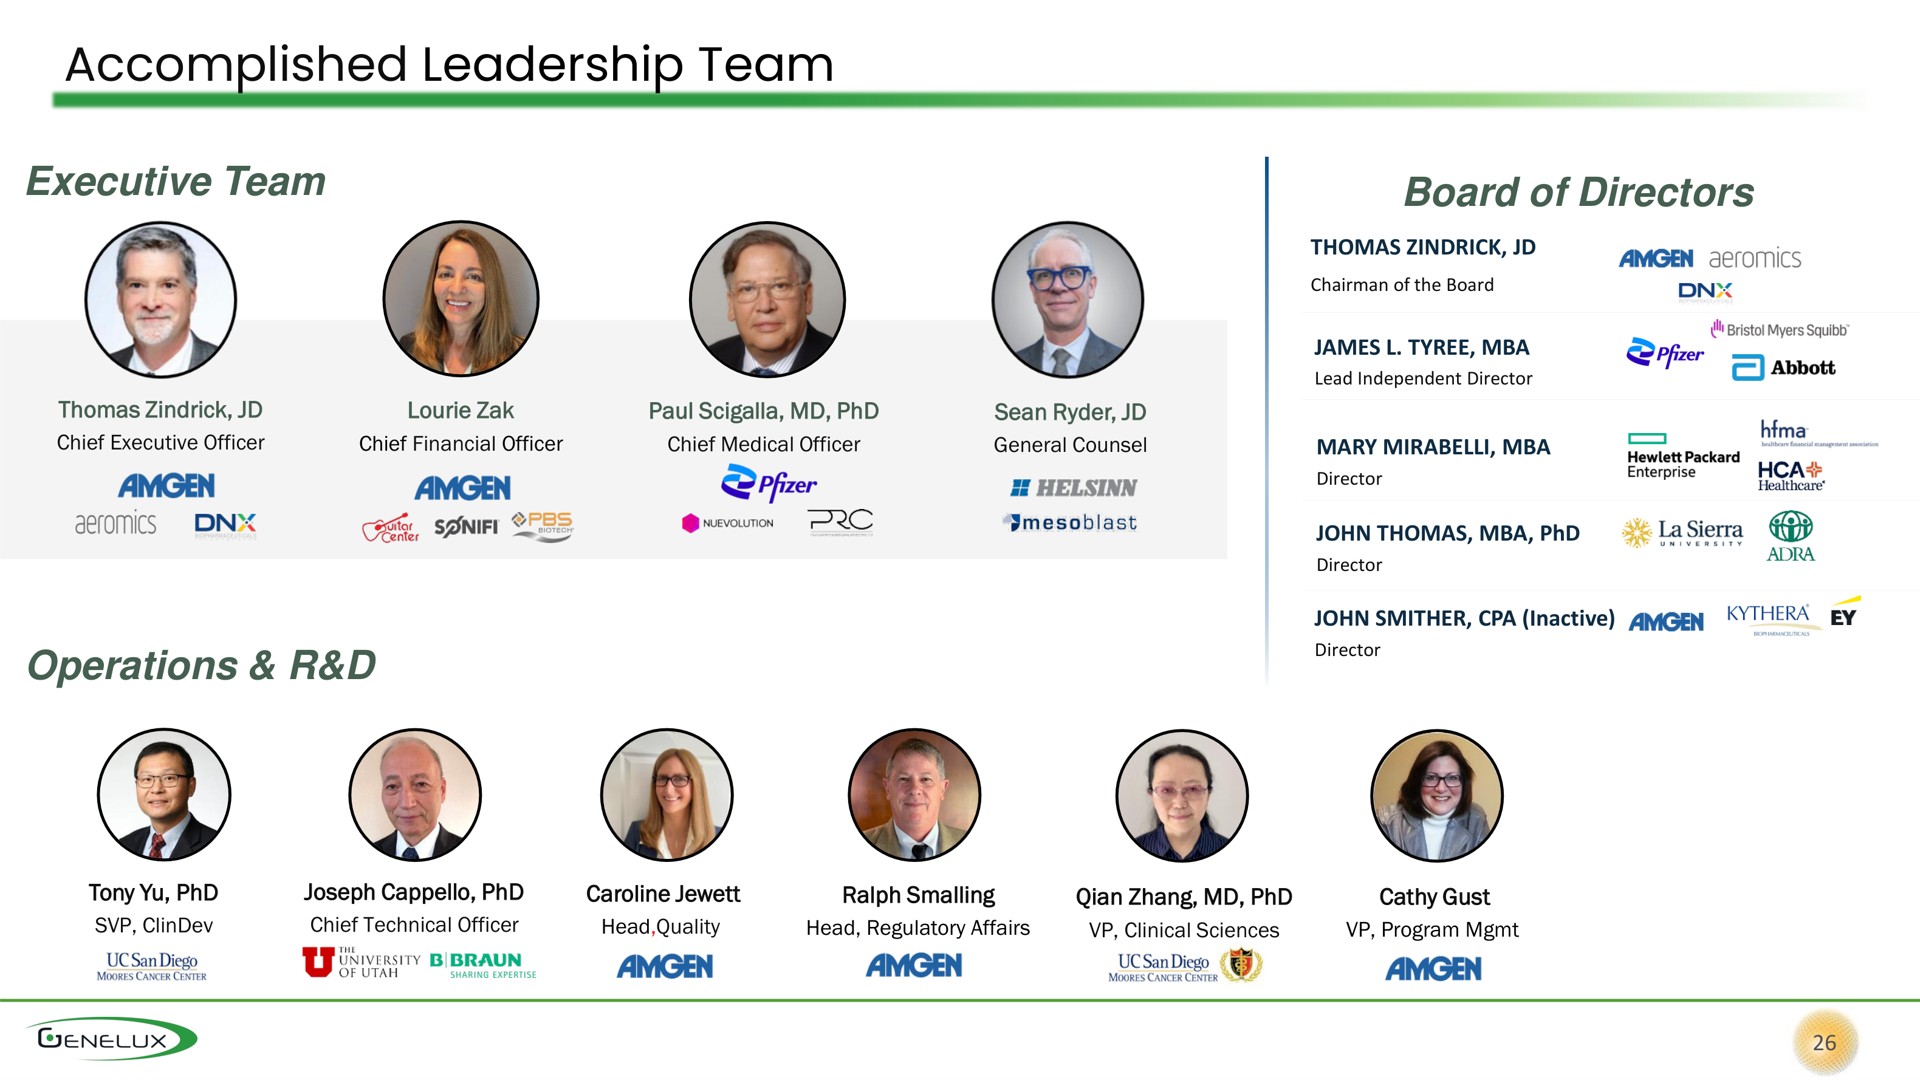 accomplished leadership team | Genelux